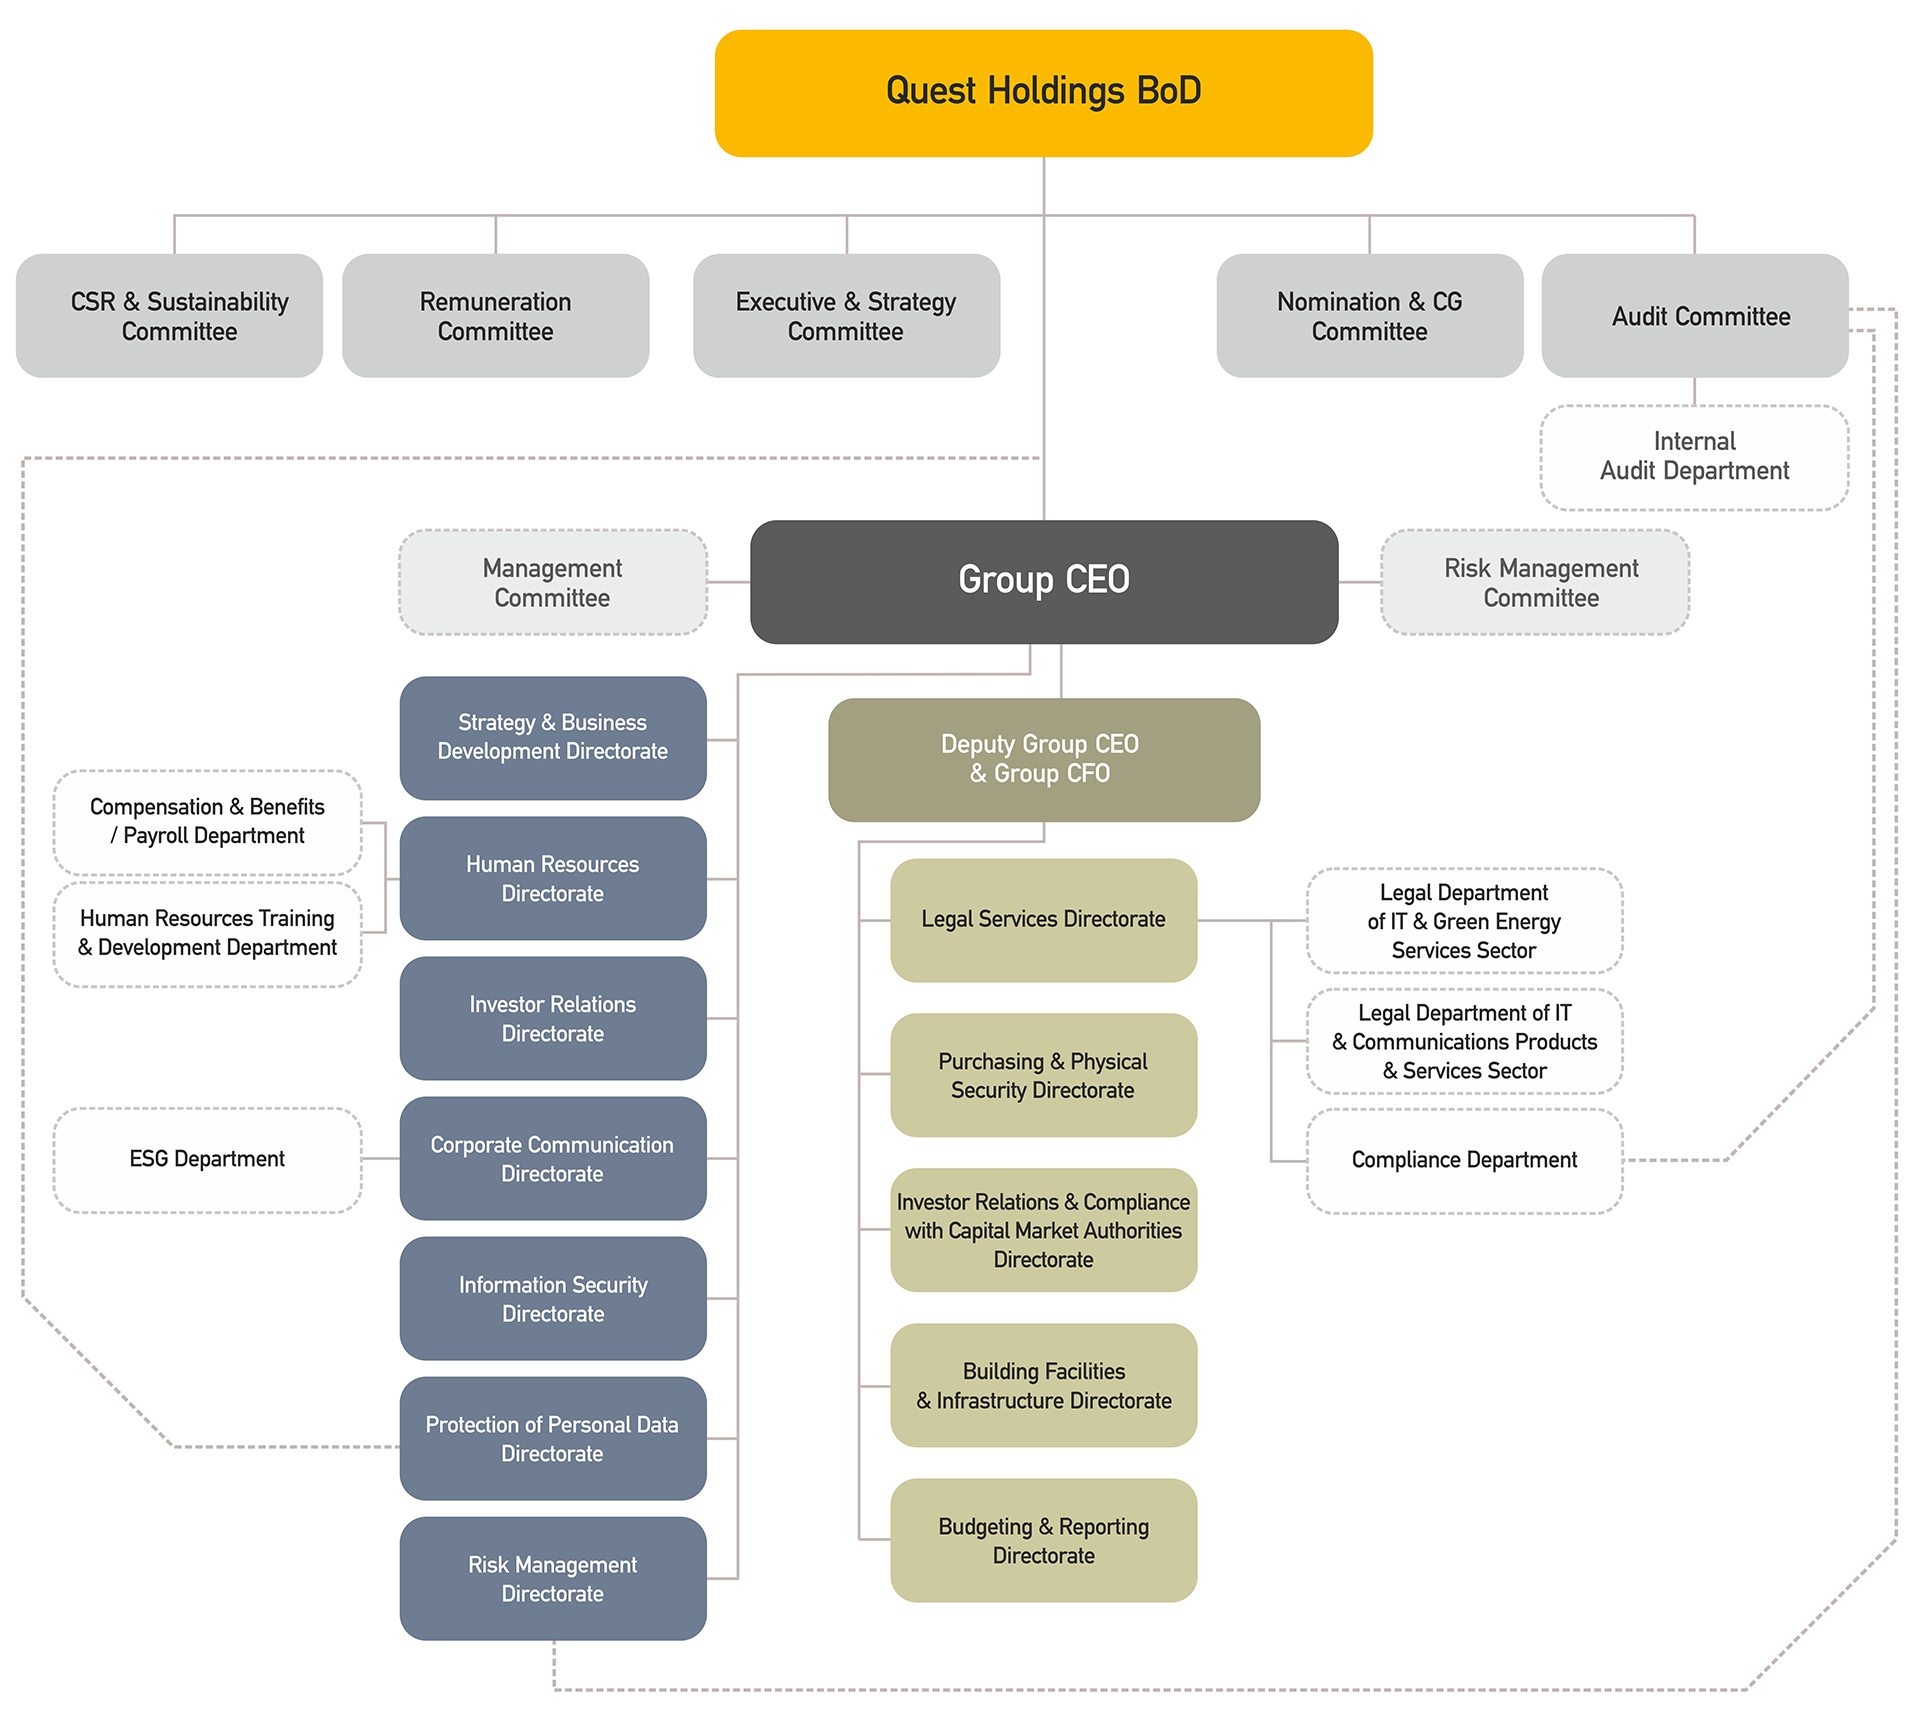 Quest Holdings Organizational Chart 